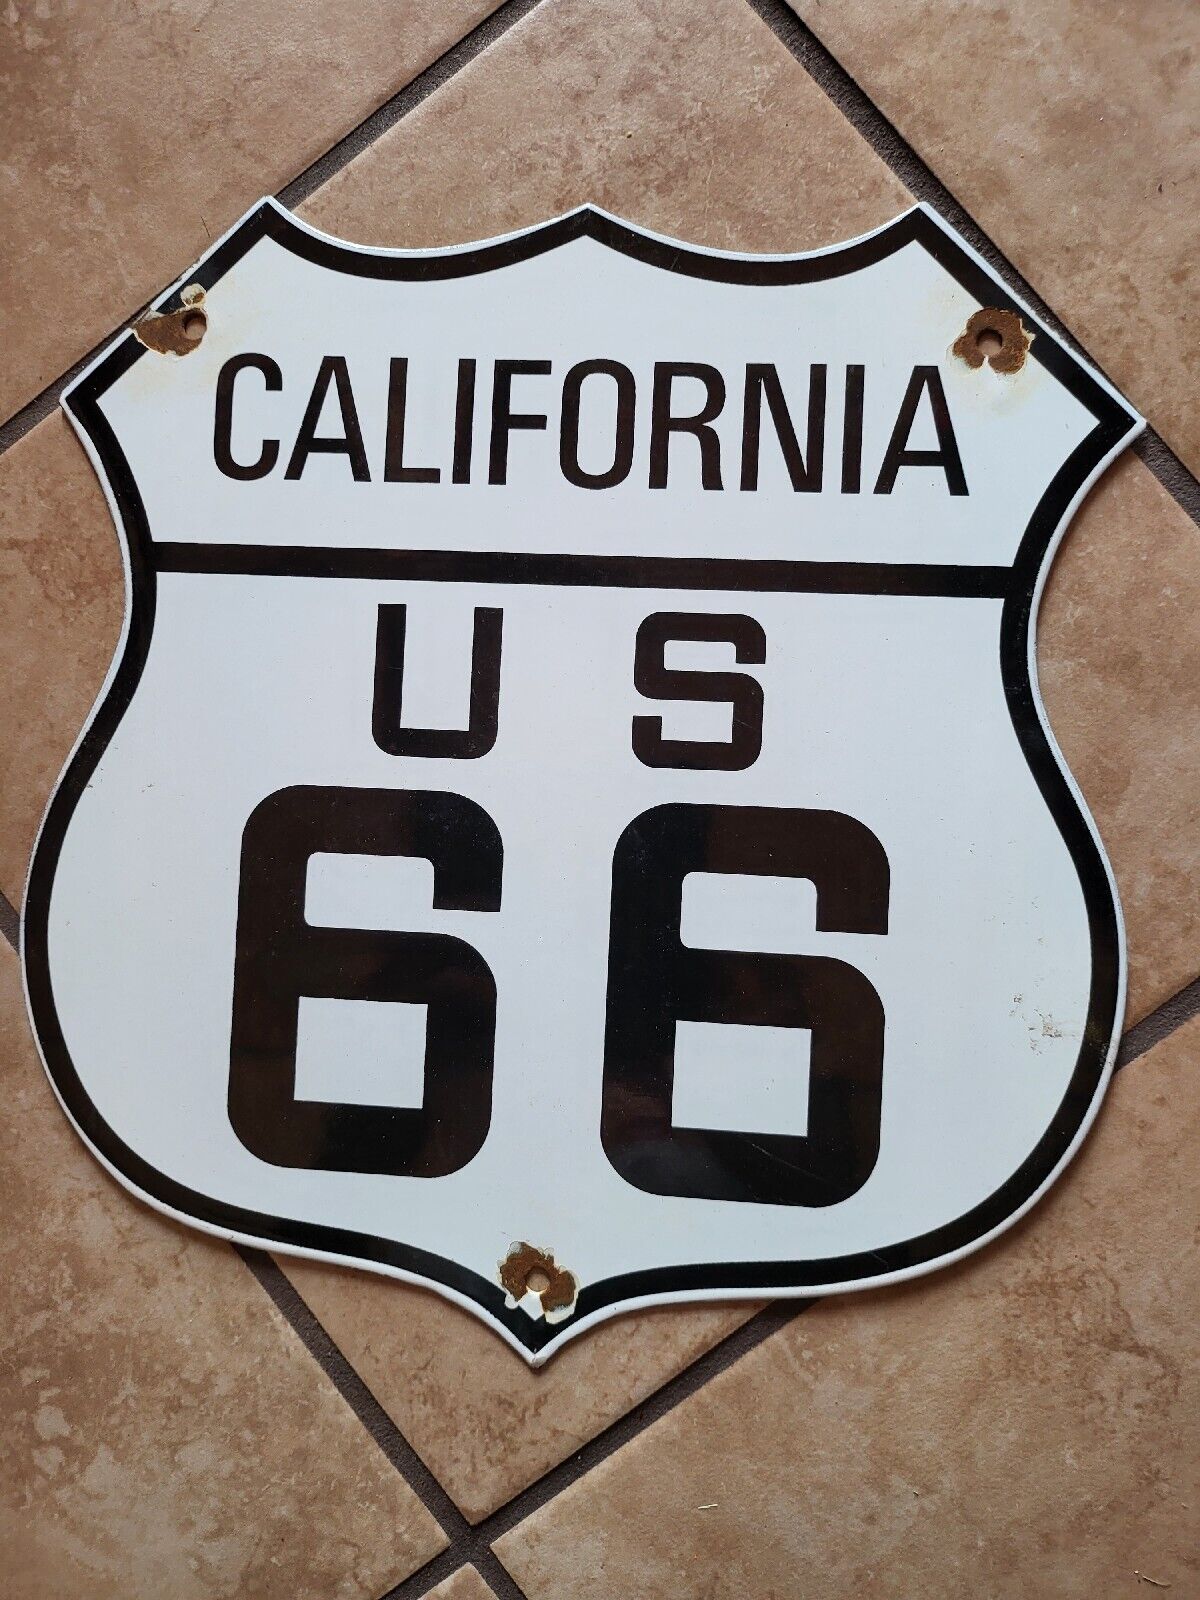 Vintage CALIFORNIA US 66 HIGHWAY OF TRANSPORTATION AND STREET ROAD PORCELAIN...